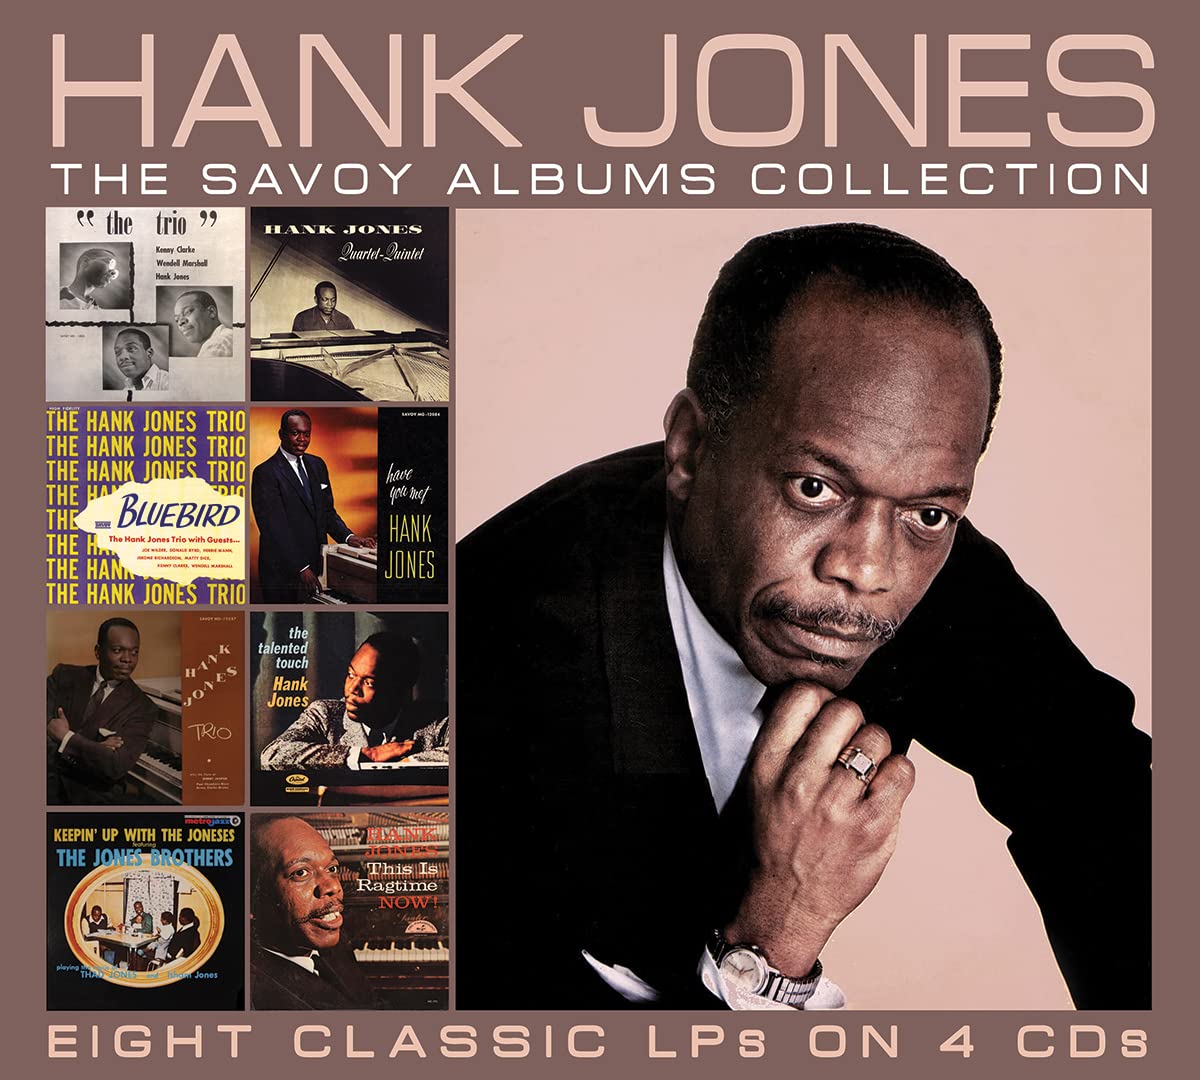 HANK JONES: The Savoy Albums Collection (4 CDs)